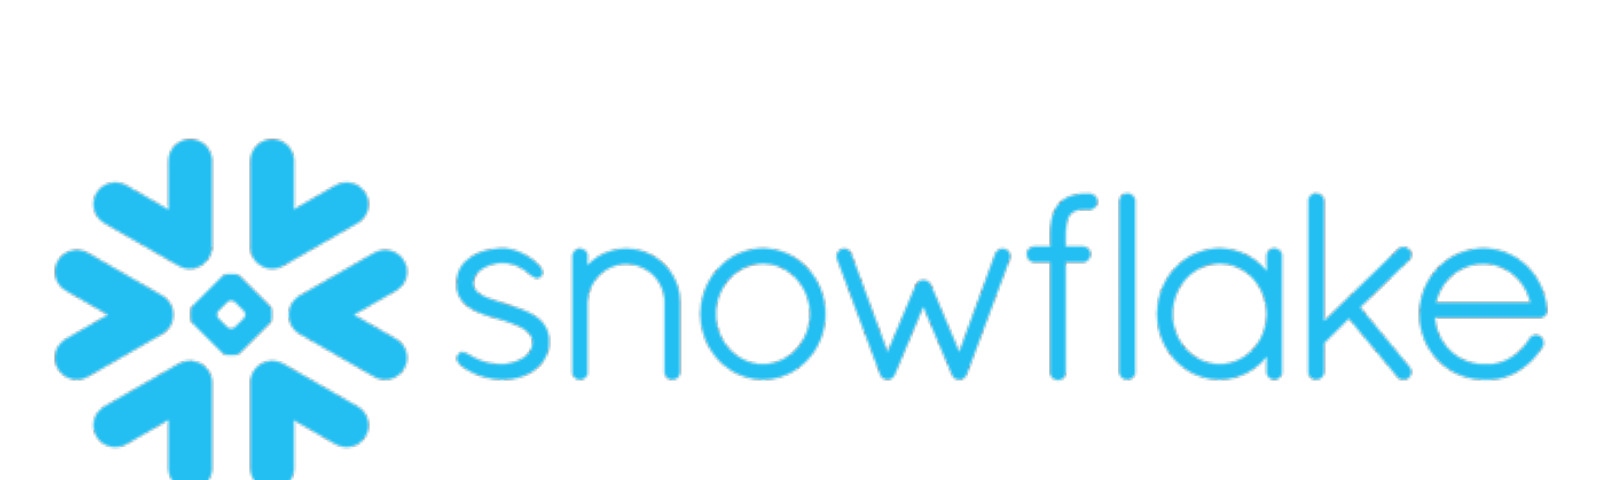 Snowflake Logo.png